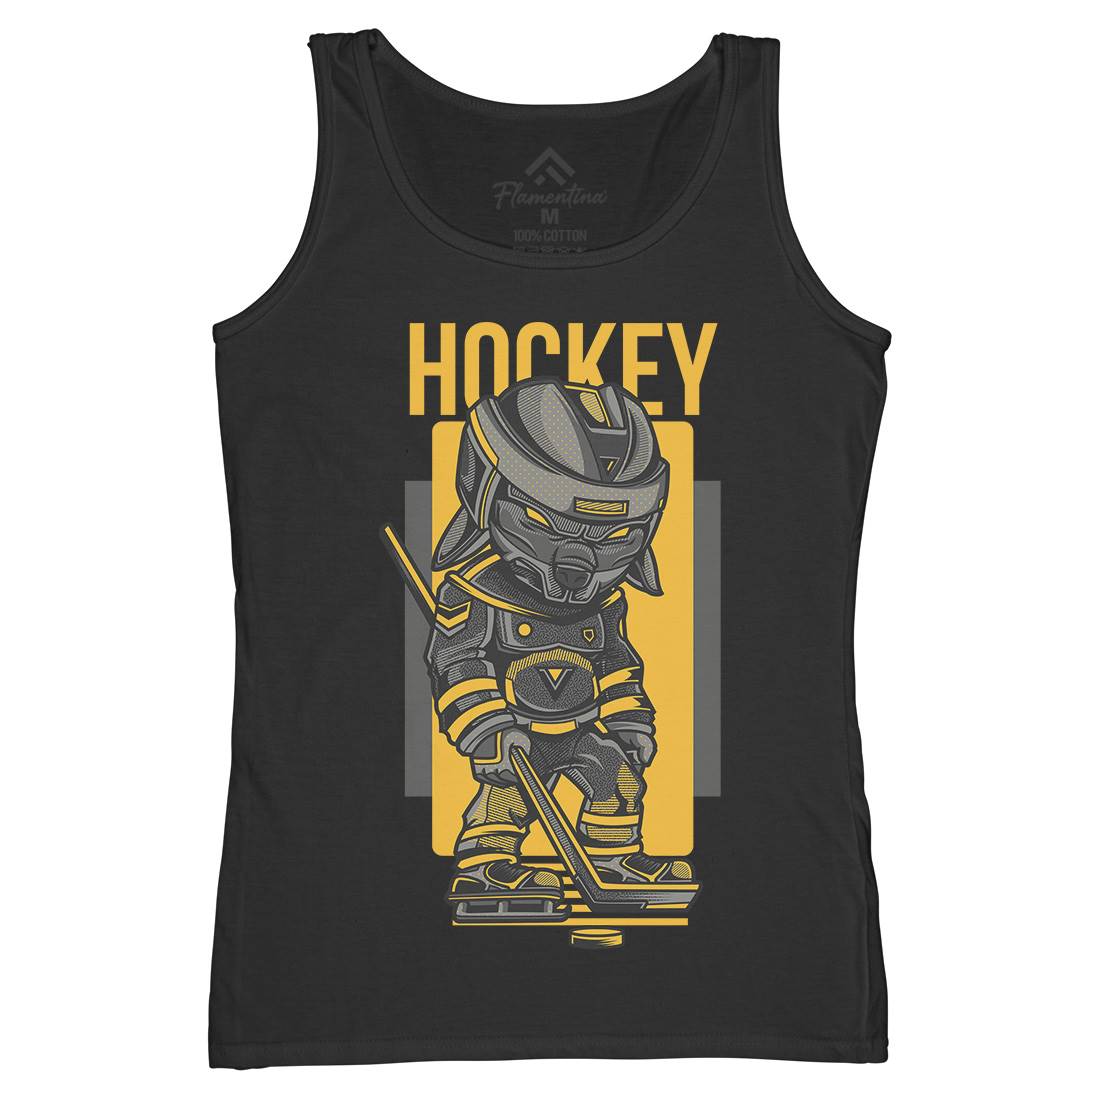 Hockey Womens Organic Tank Top Vest Sport D614